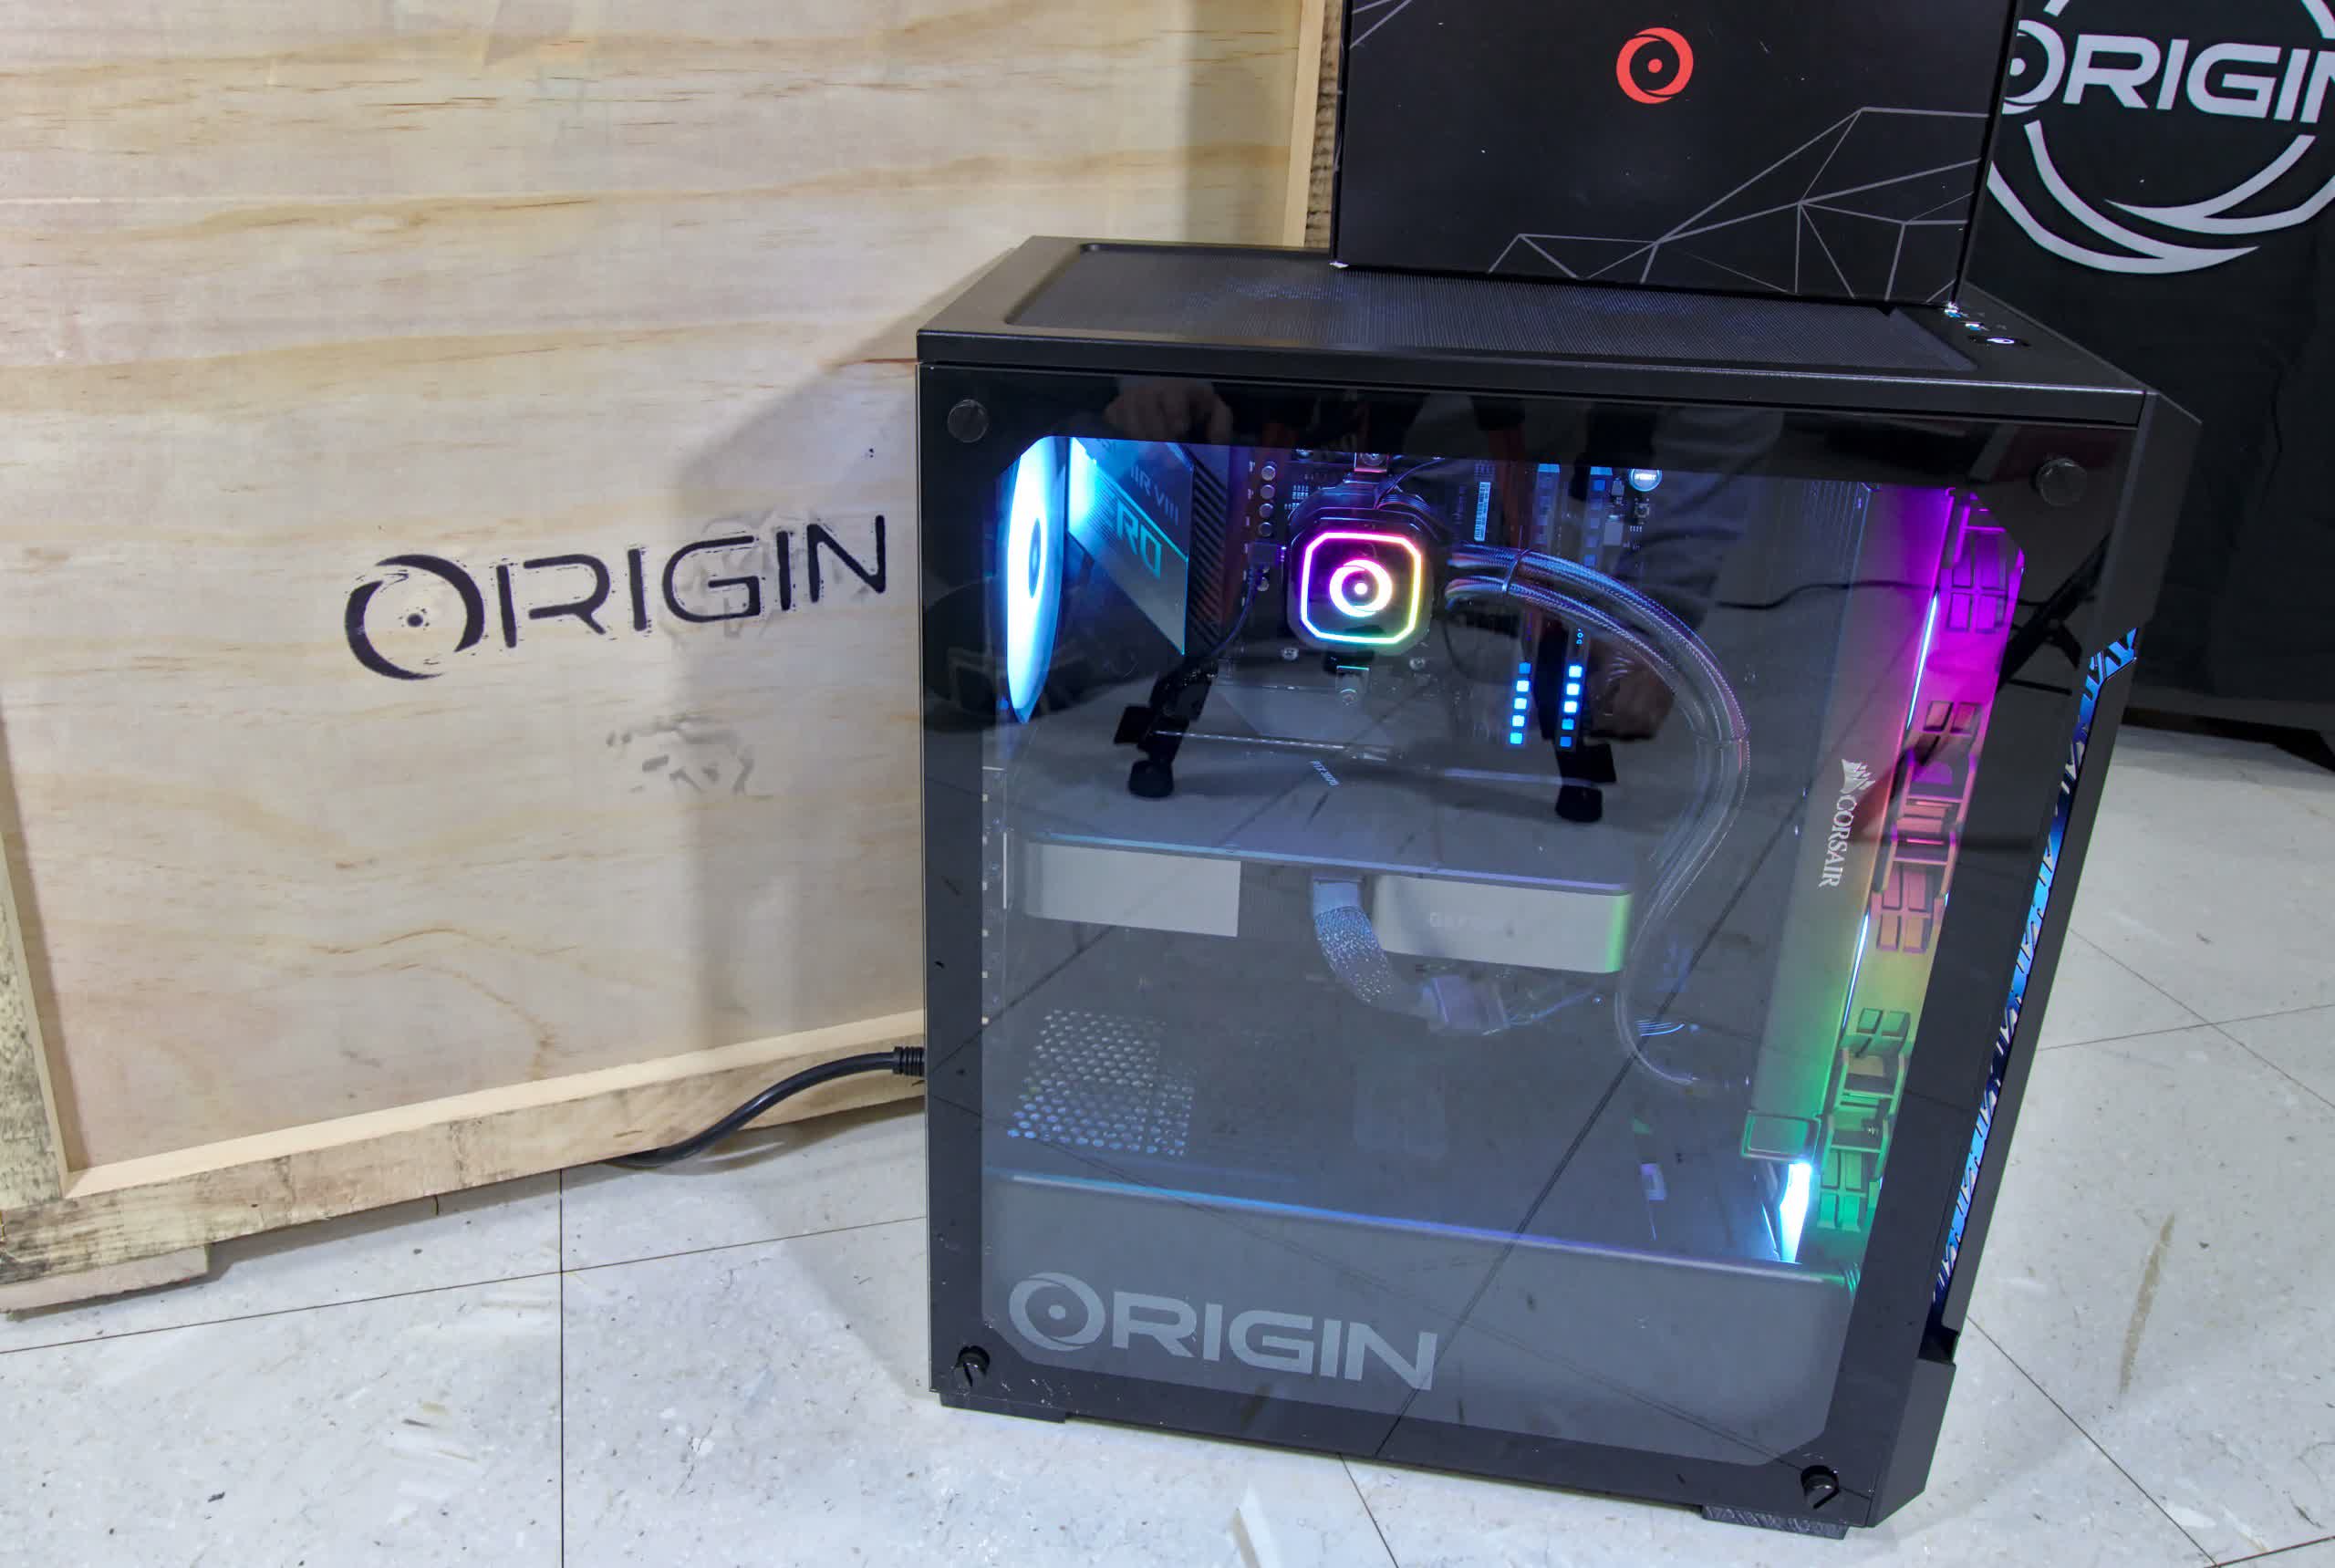 Origin Neuron Gaming Desktop PC Review Photo Gallery - TechSpot